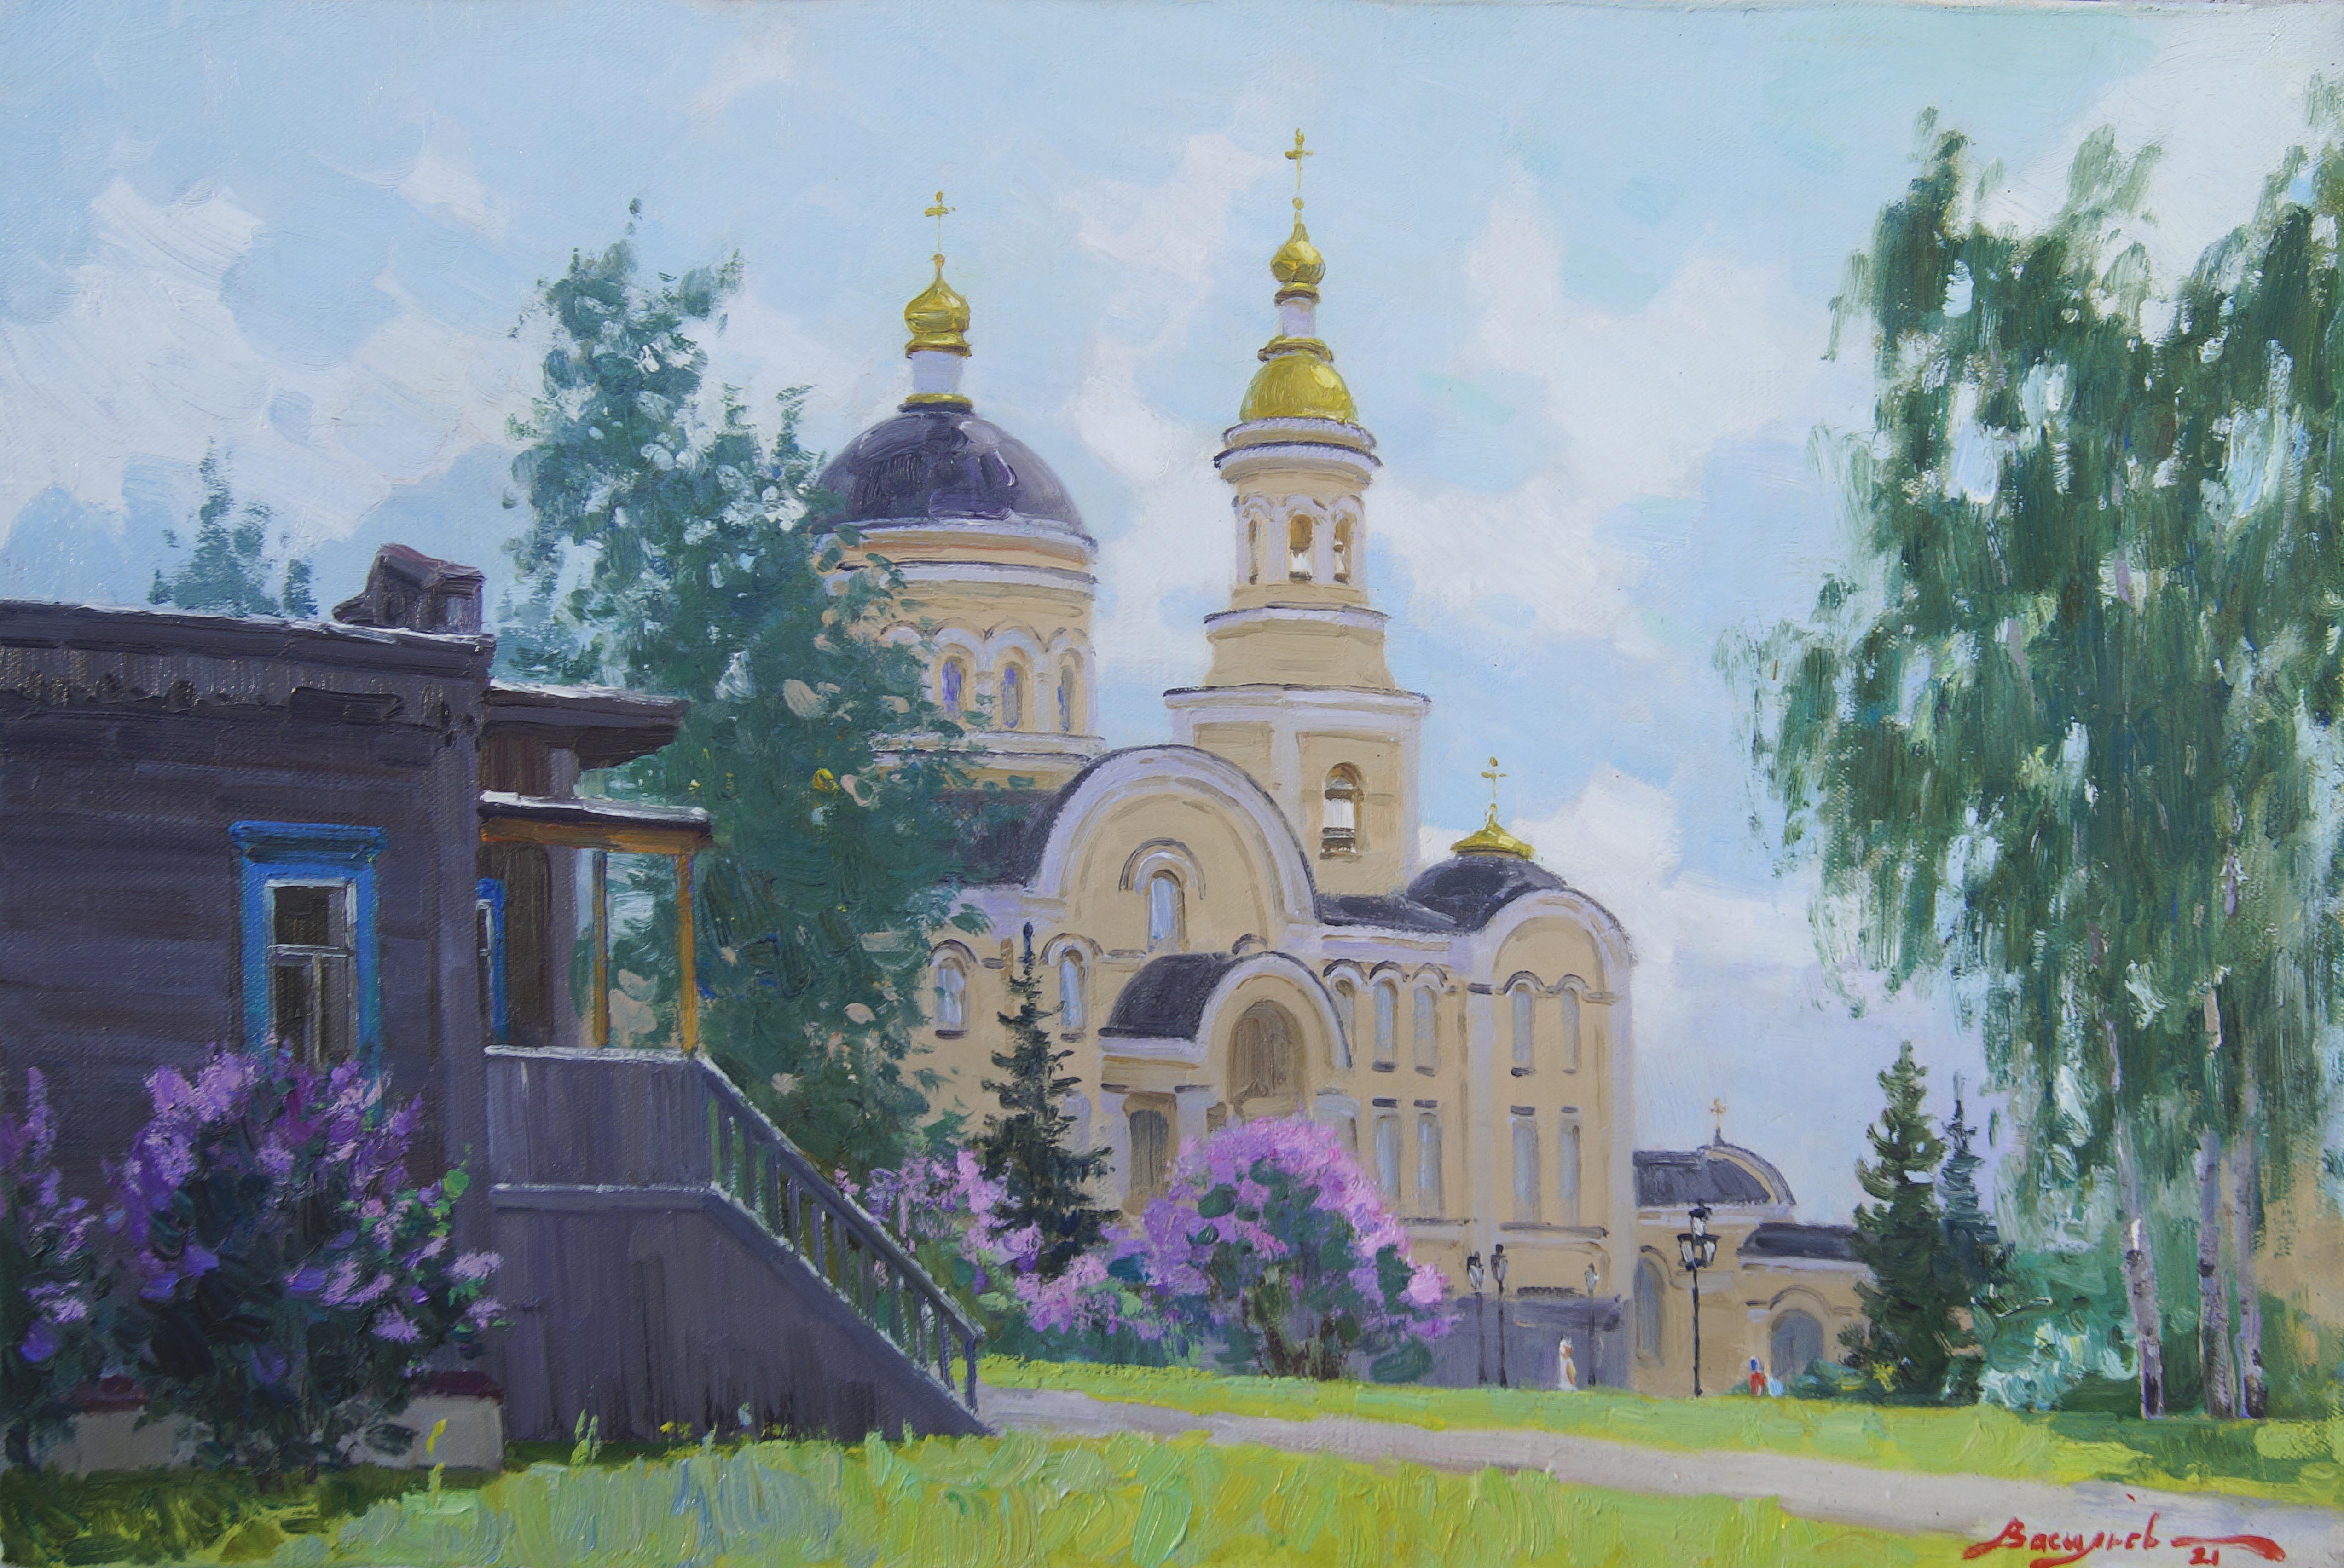 The Noon at the Merkushino - 1, Dmitry Vasiliev, Buy the painting Oil